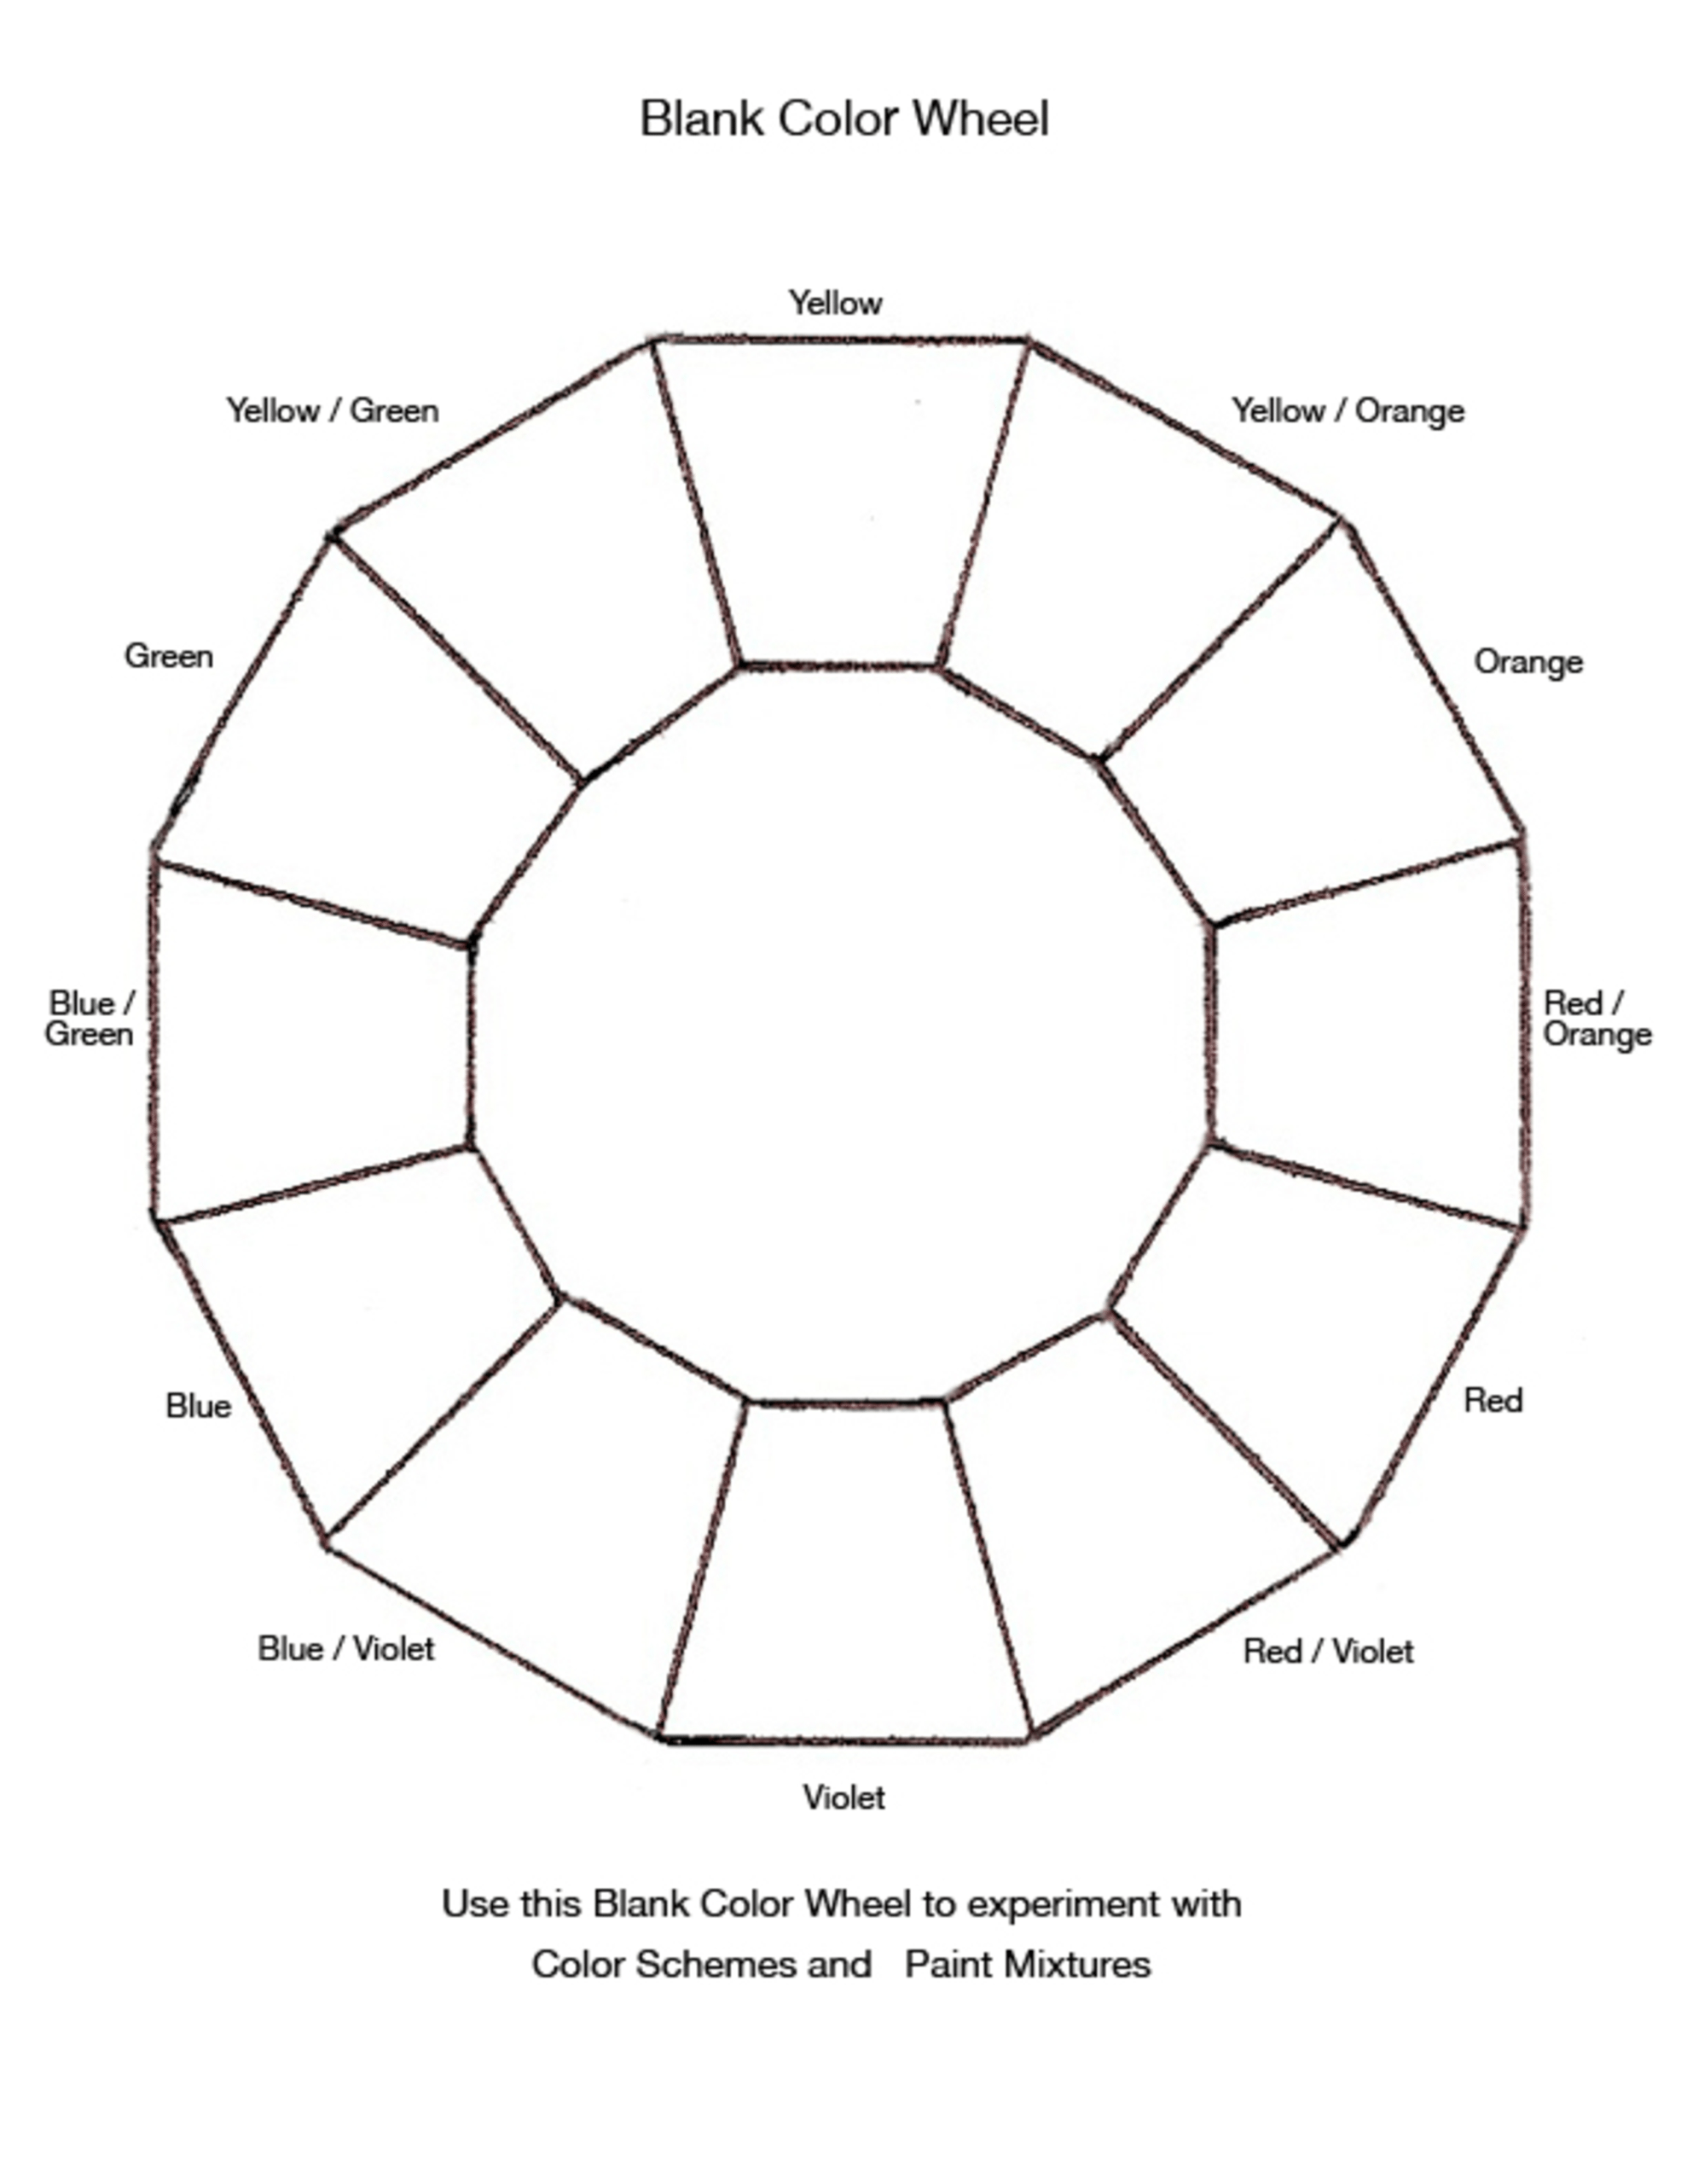 Blank Color Wheel Chart | Templates At Allbusinesstemplates Inside Blank Color Wheel Template